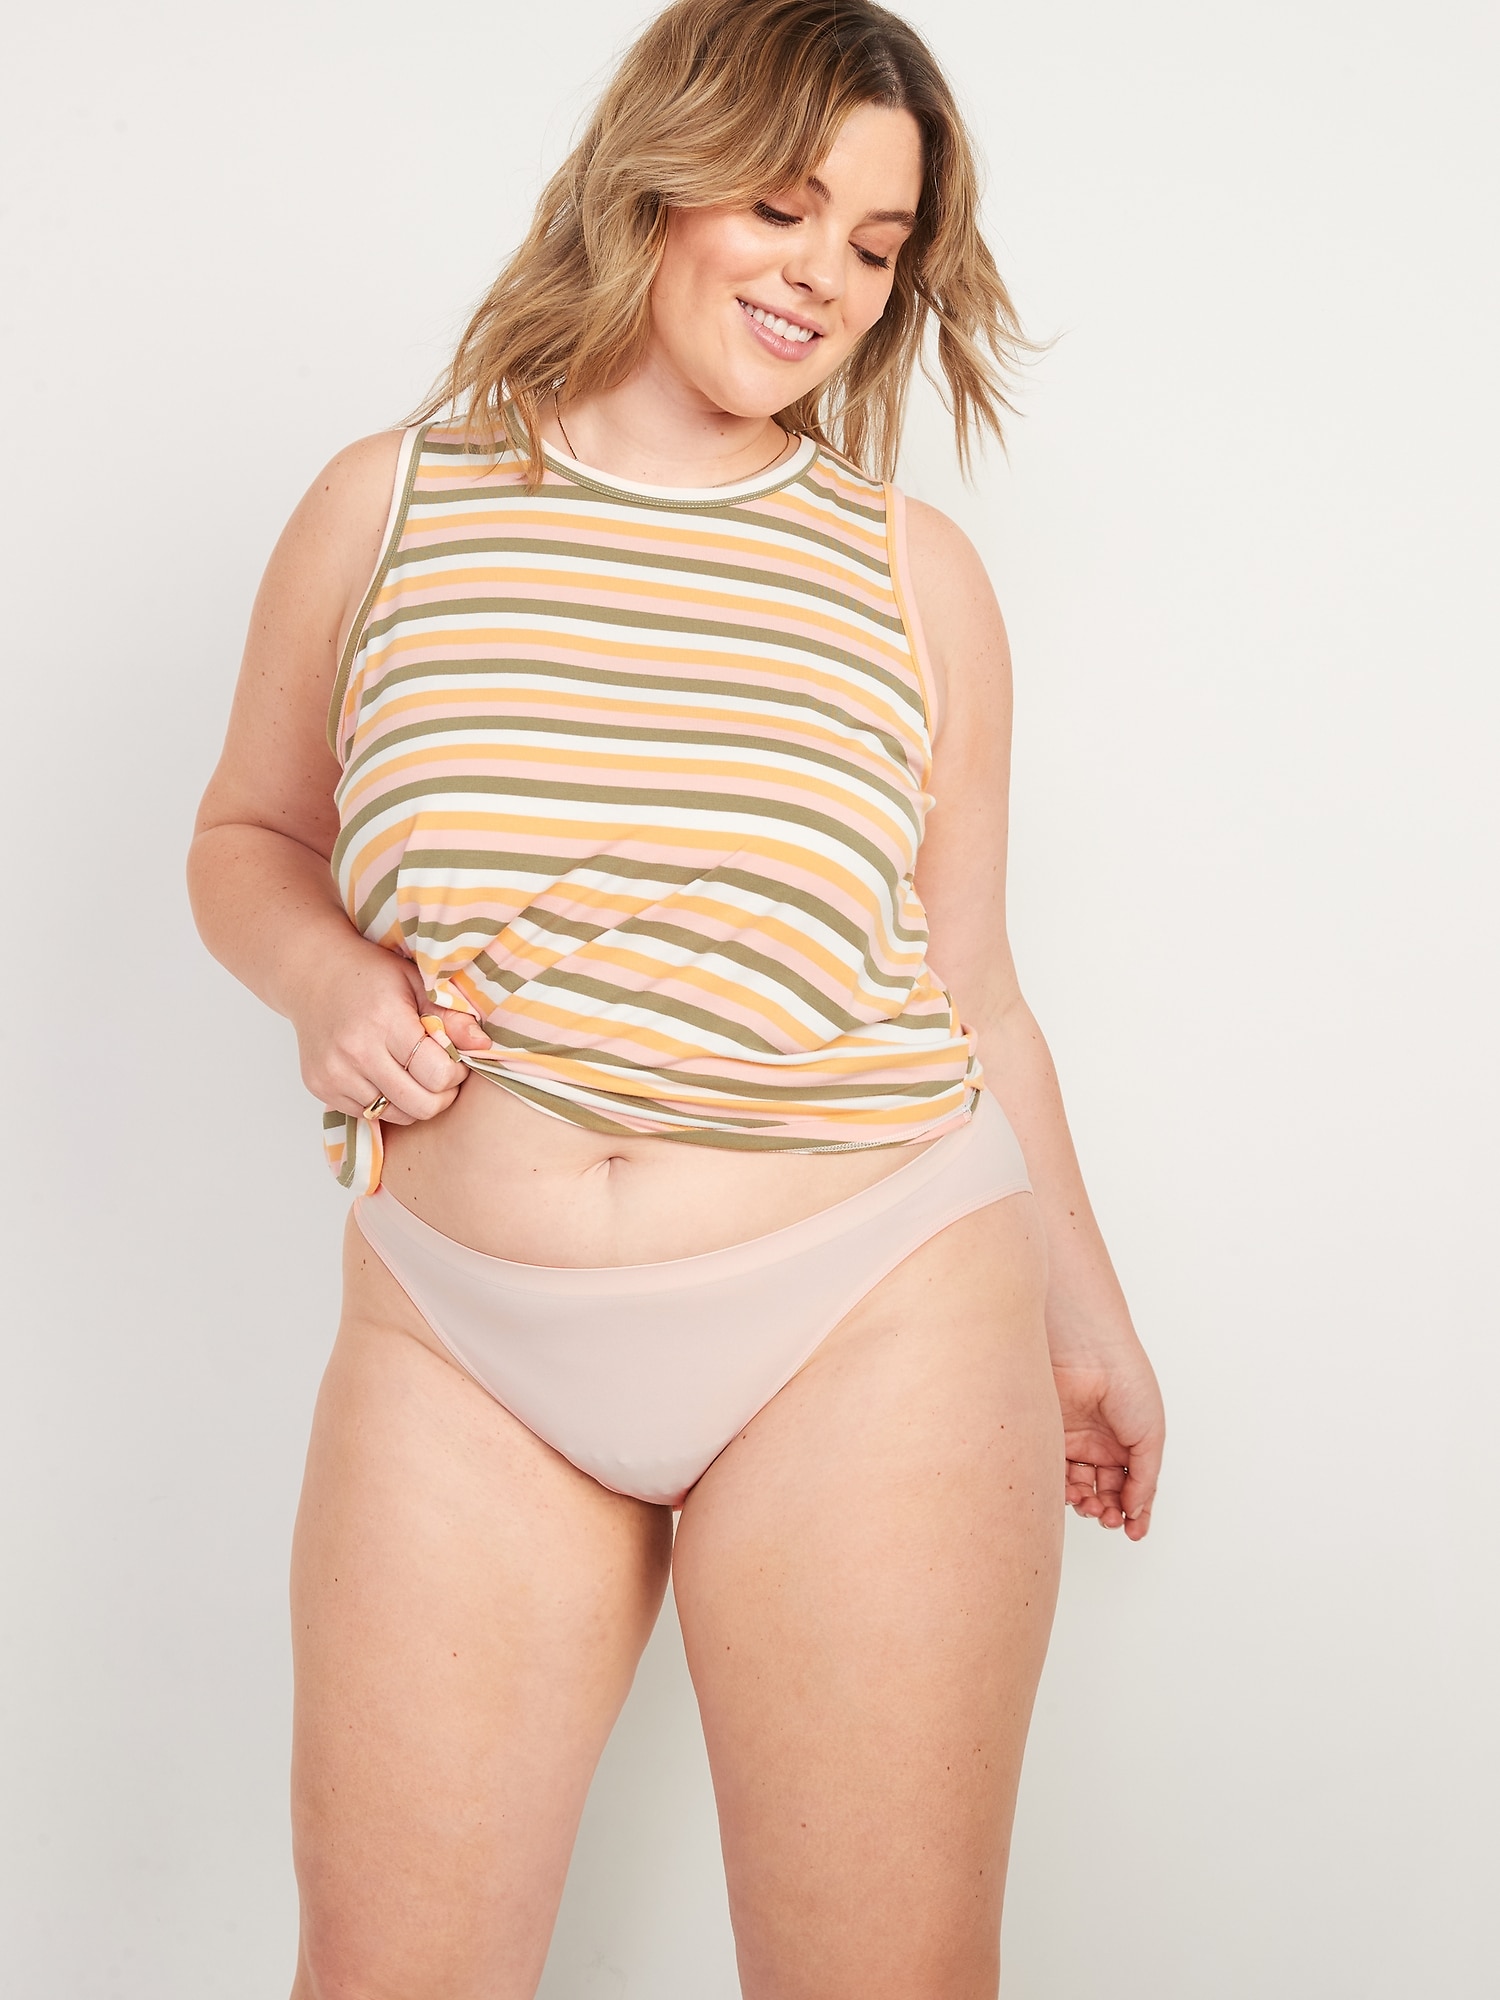 GapBody Ladies Seamless Bikini Underwear Small 